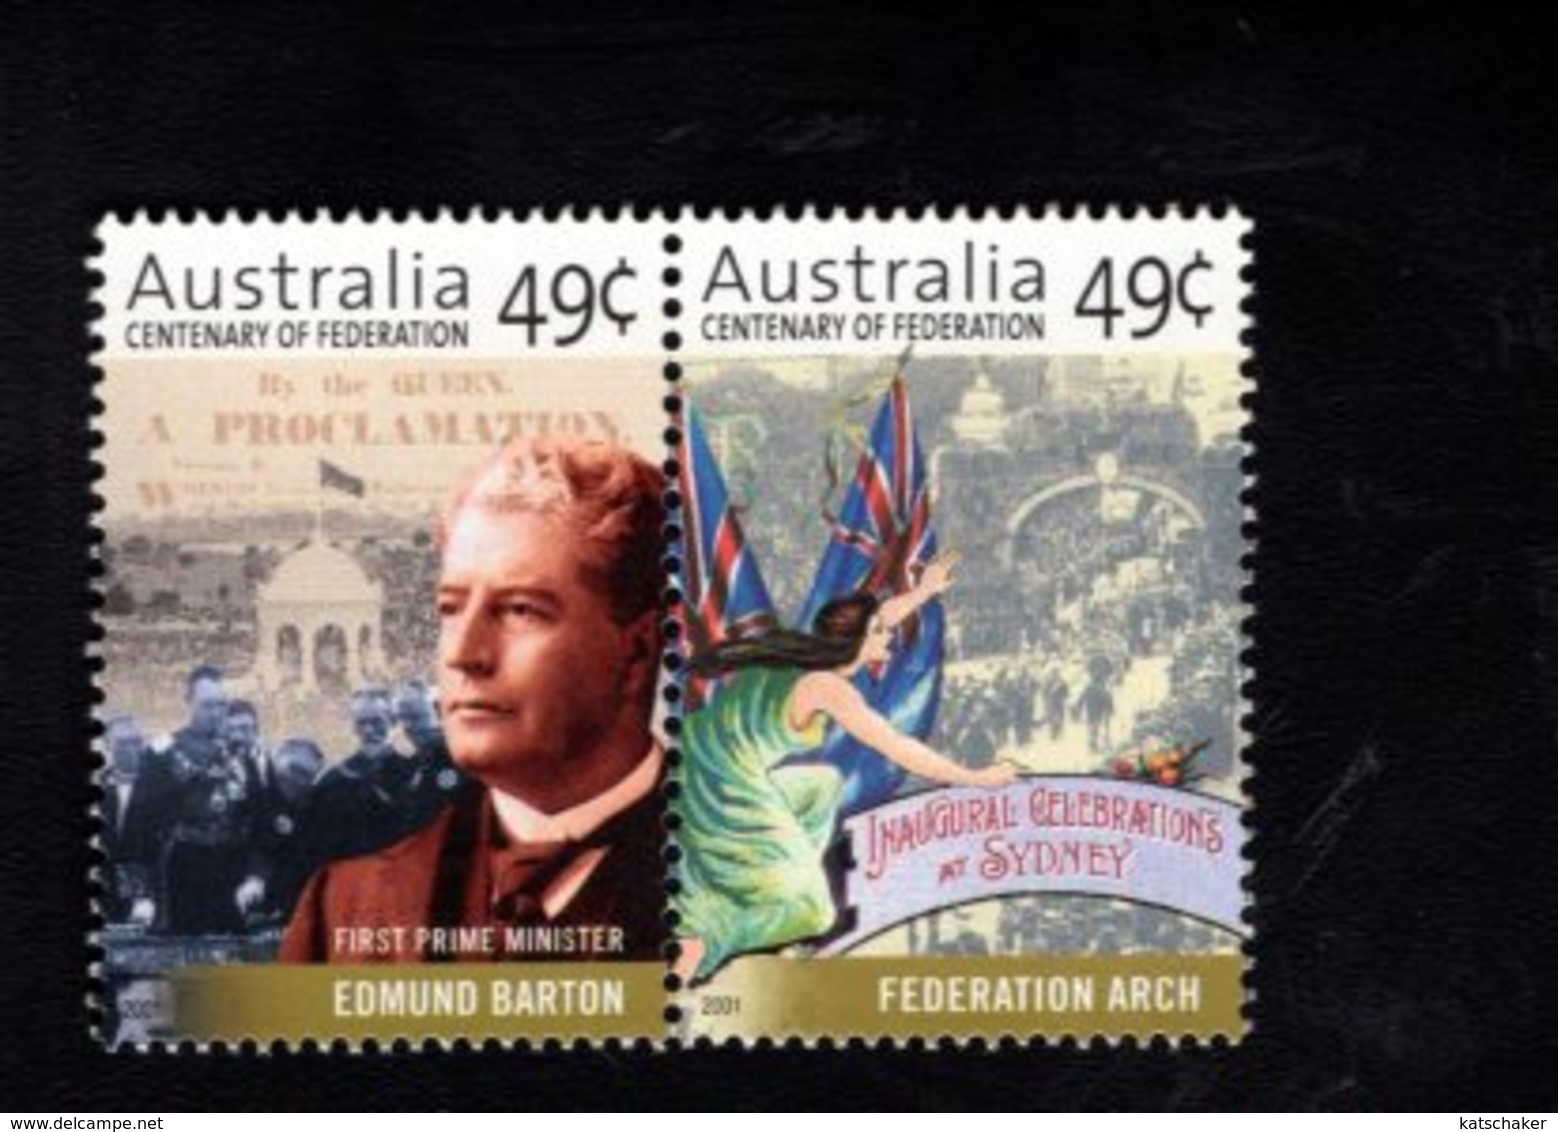 784251101 2001 SCOTT 1928A POSTFRIS  MINT NEVER HINGED EINWANDFREI  (XX) - FEDERATION  OF AUSTRALIA CENTENAIR - Mint Stamps